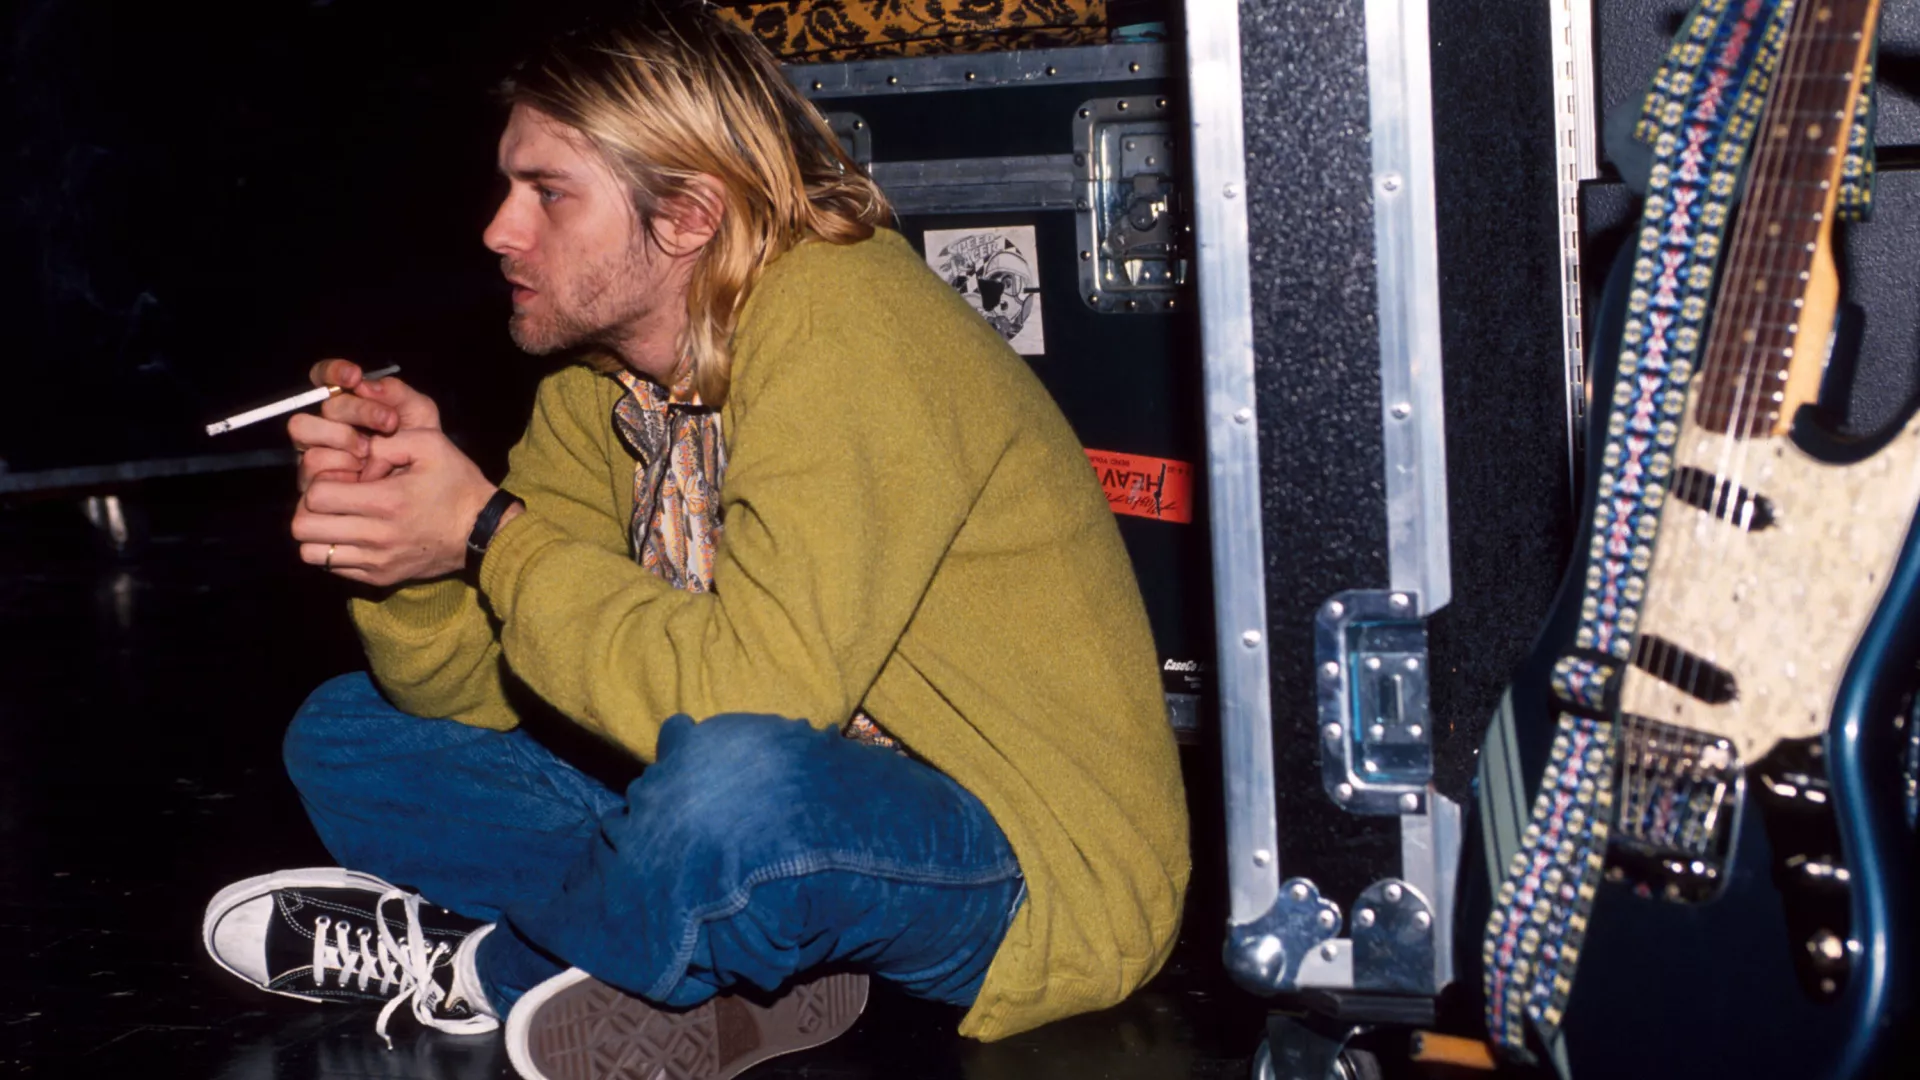 Kurt Cobain and the Smells Like Teen Spirit Mustang